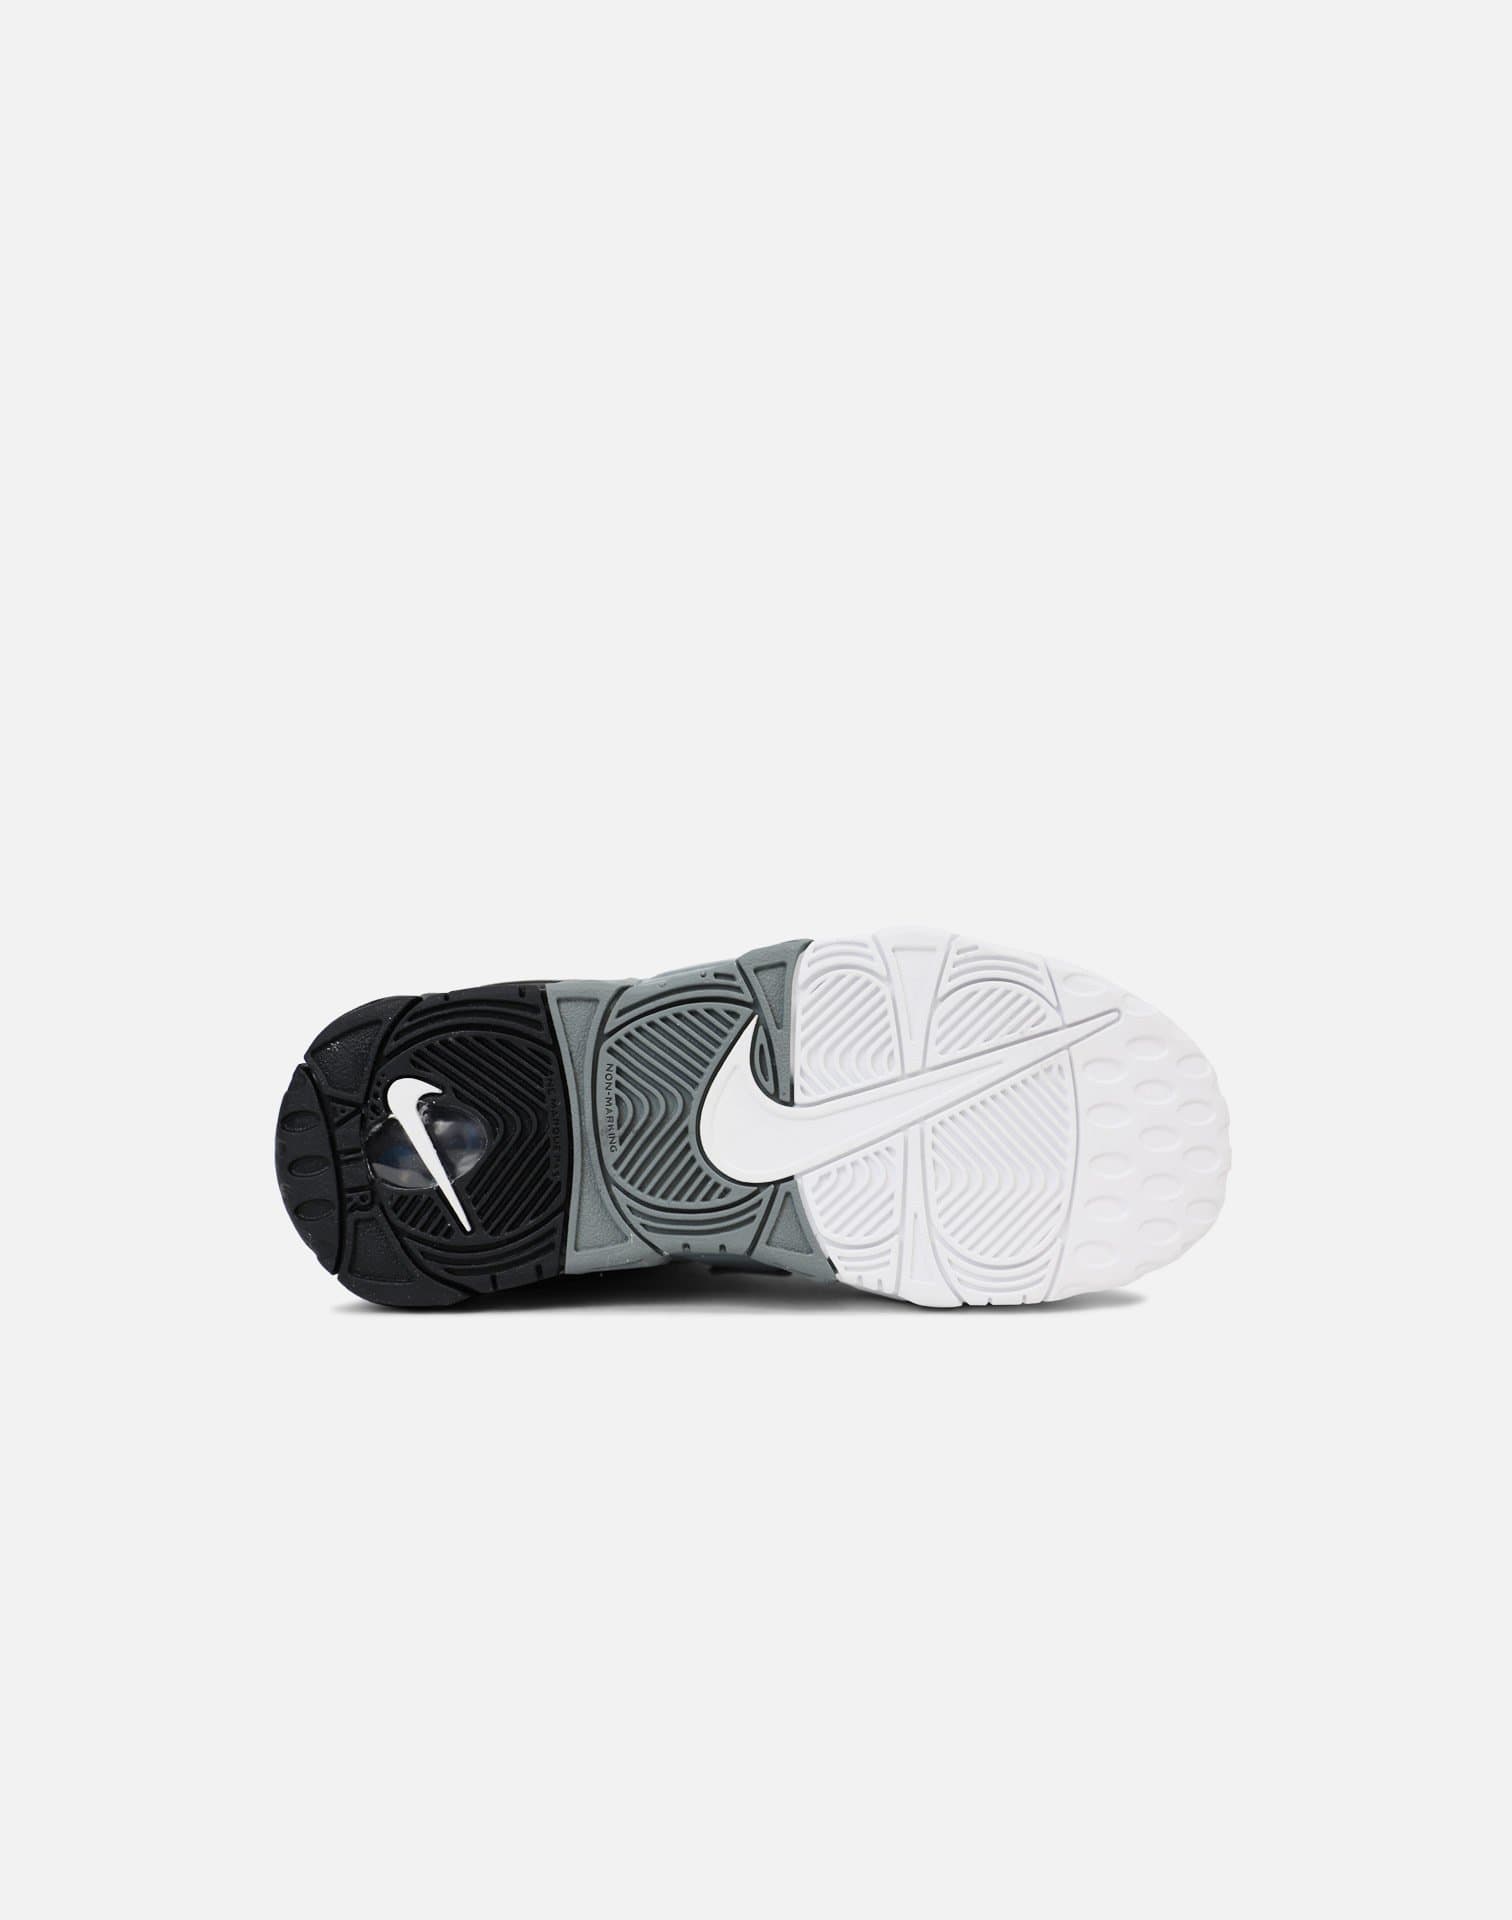 Nike Air More Uptempo Tri-Color White Grey Black